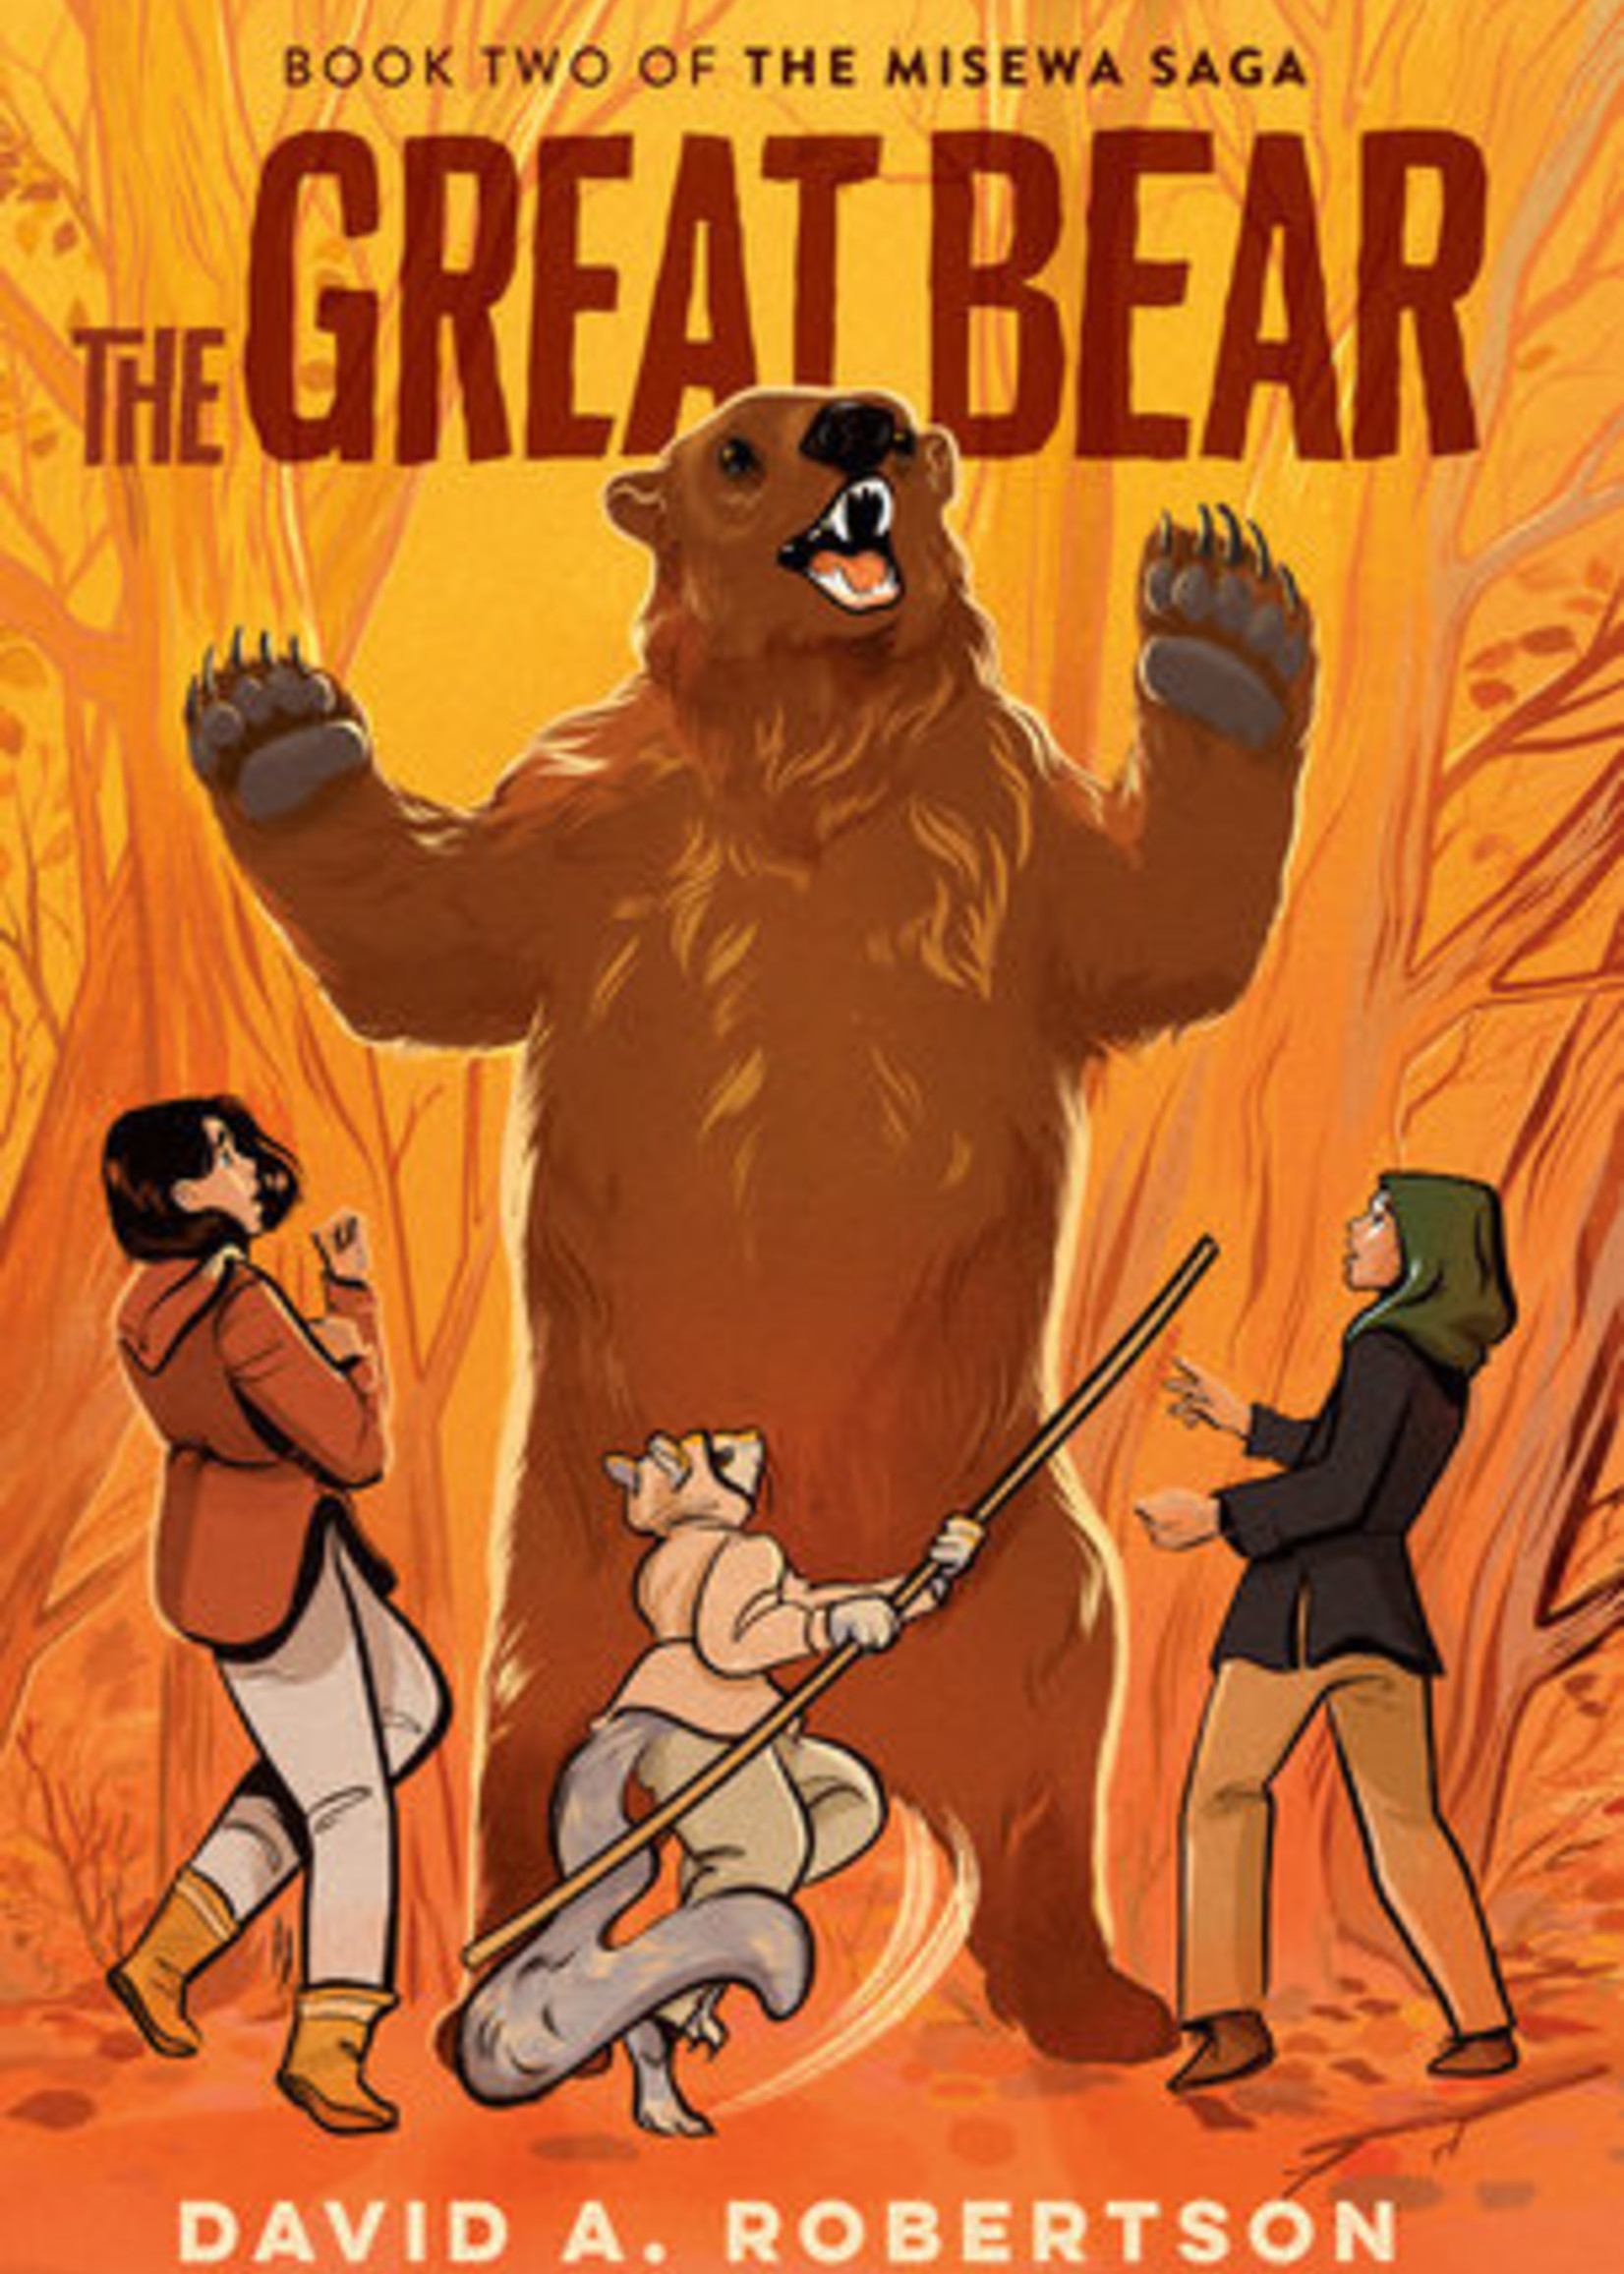 The Misewa Saga #02, The Great Bear - Paperback